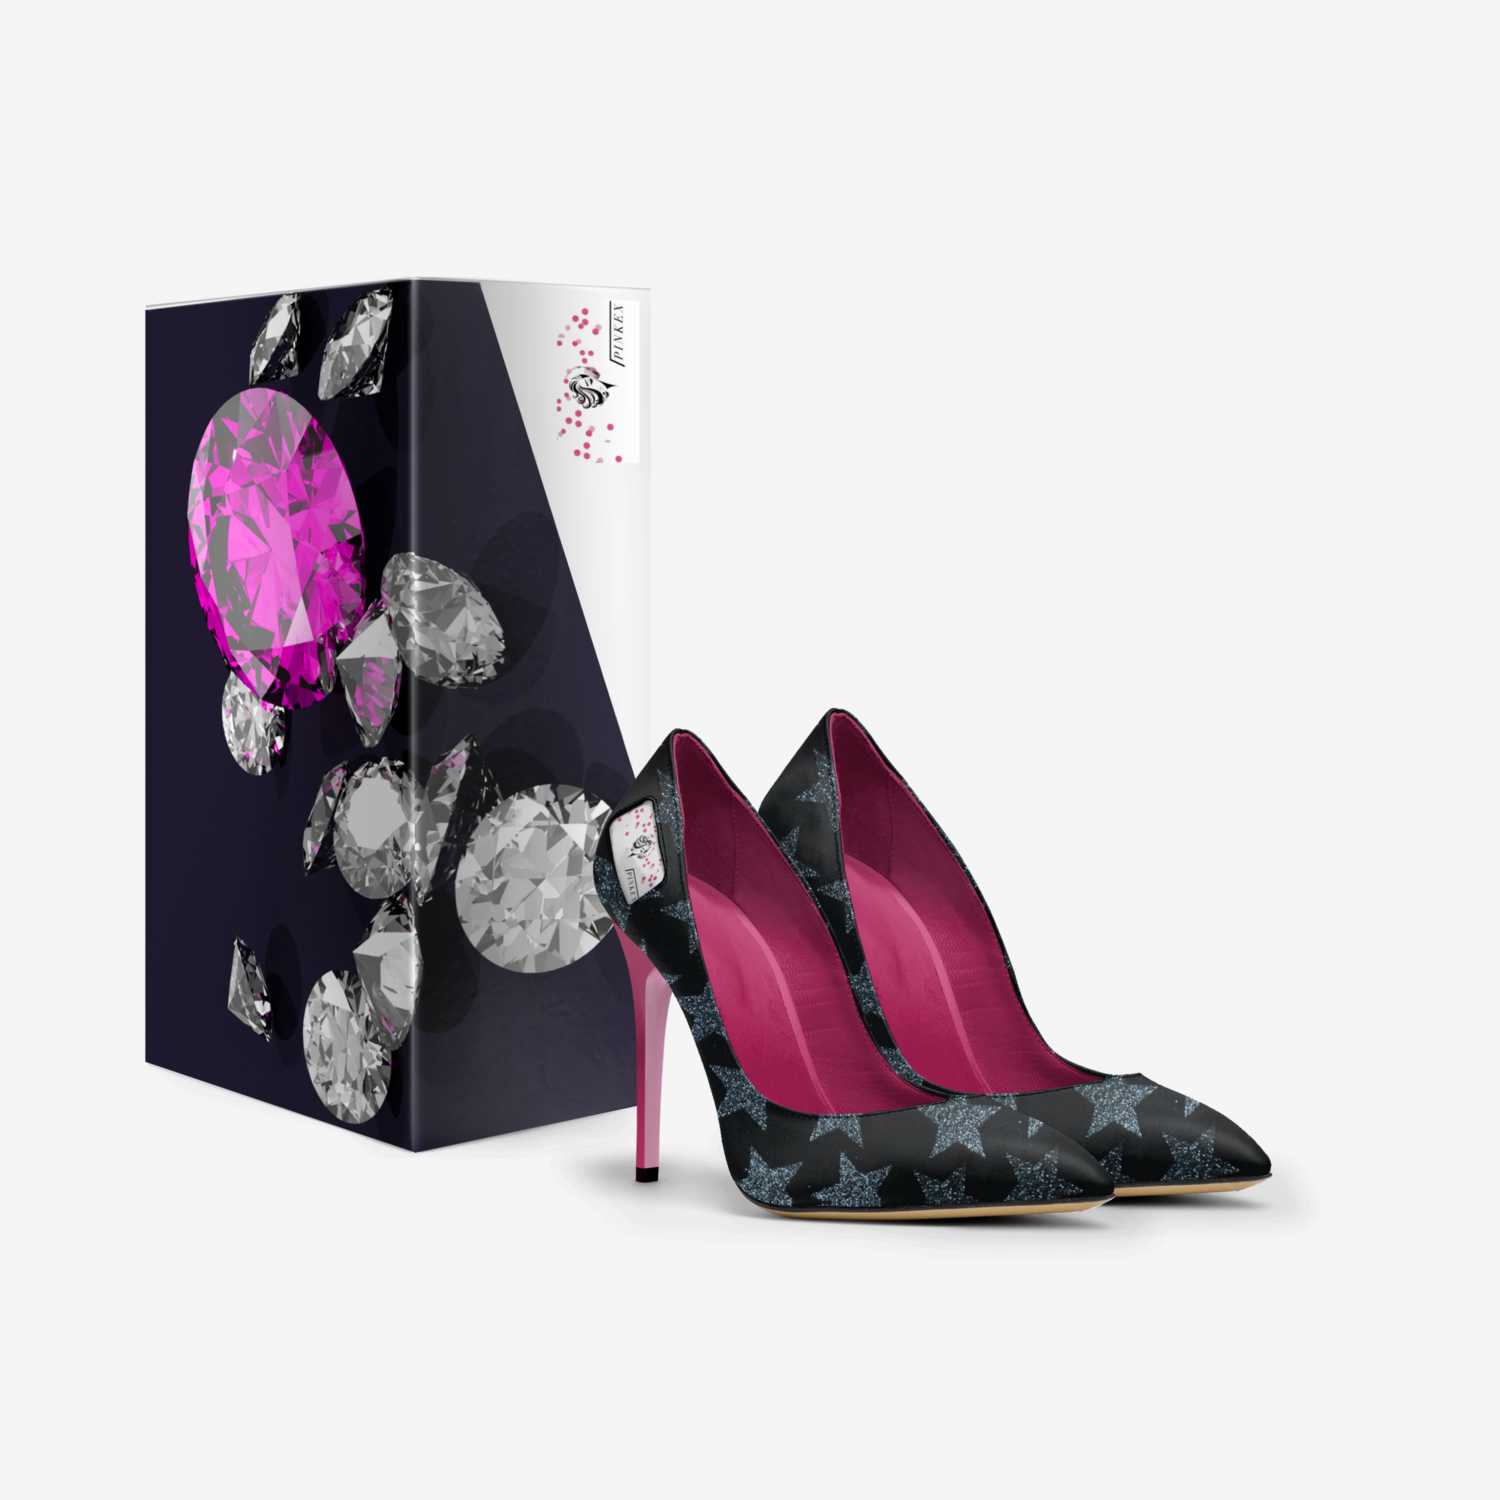 PinkEx custom made in Italy shoes by Nayamka Jackson | Box view